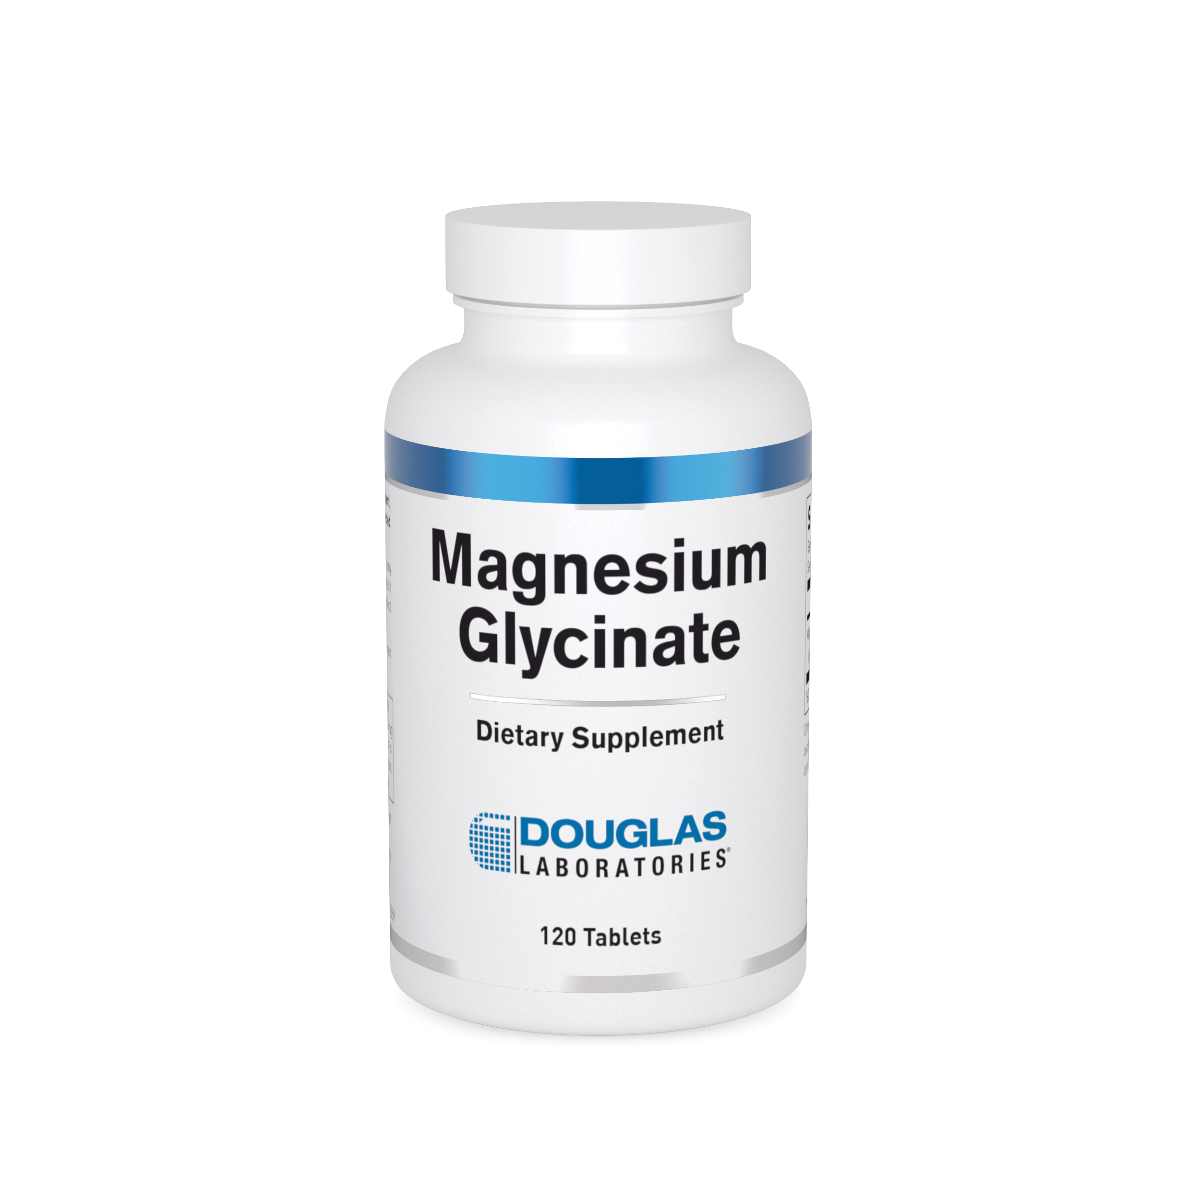 Douglas Laboratories Magnesium Glycinate 120's